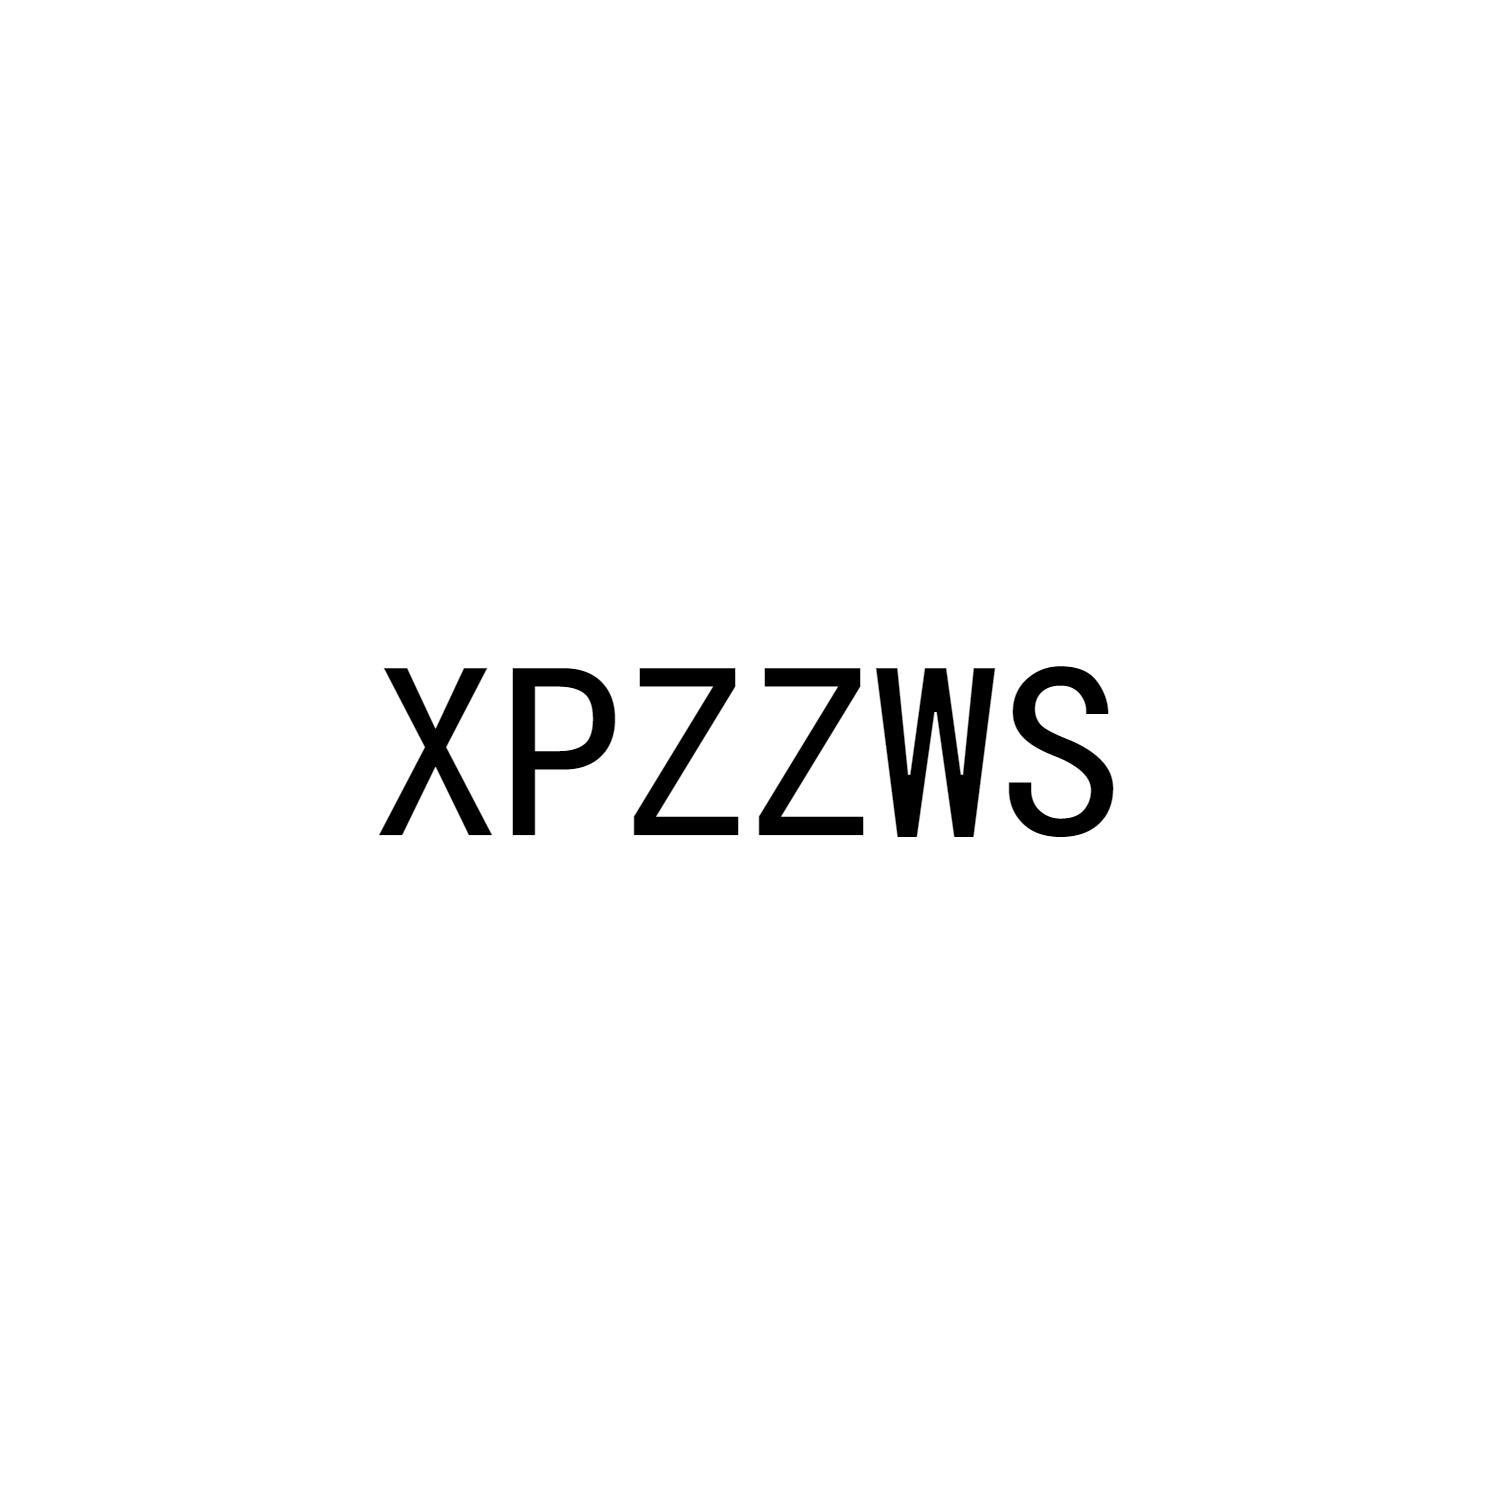 XPZZWS